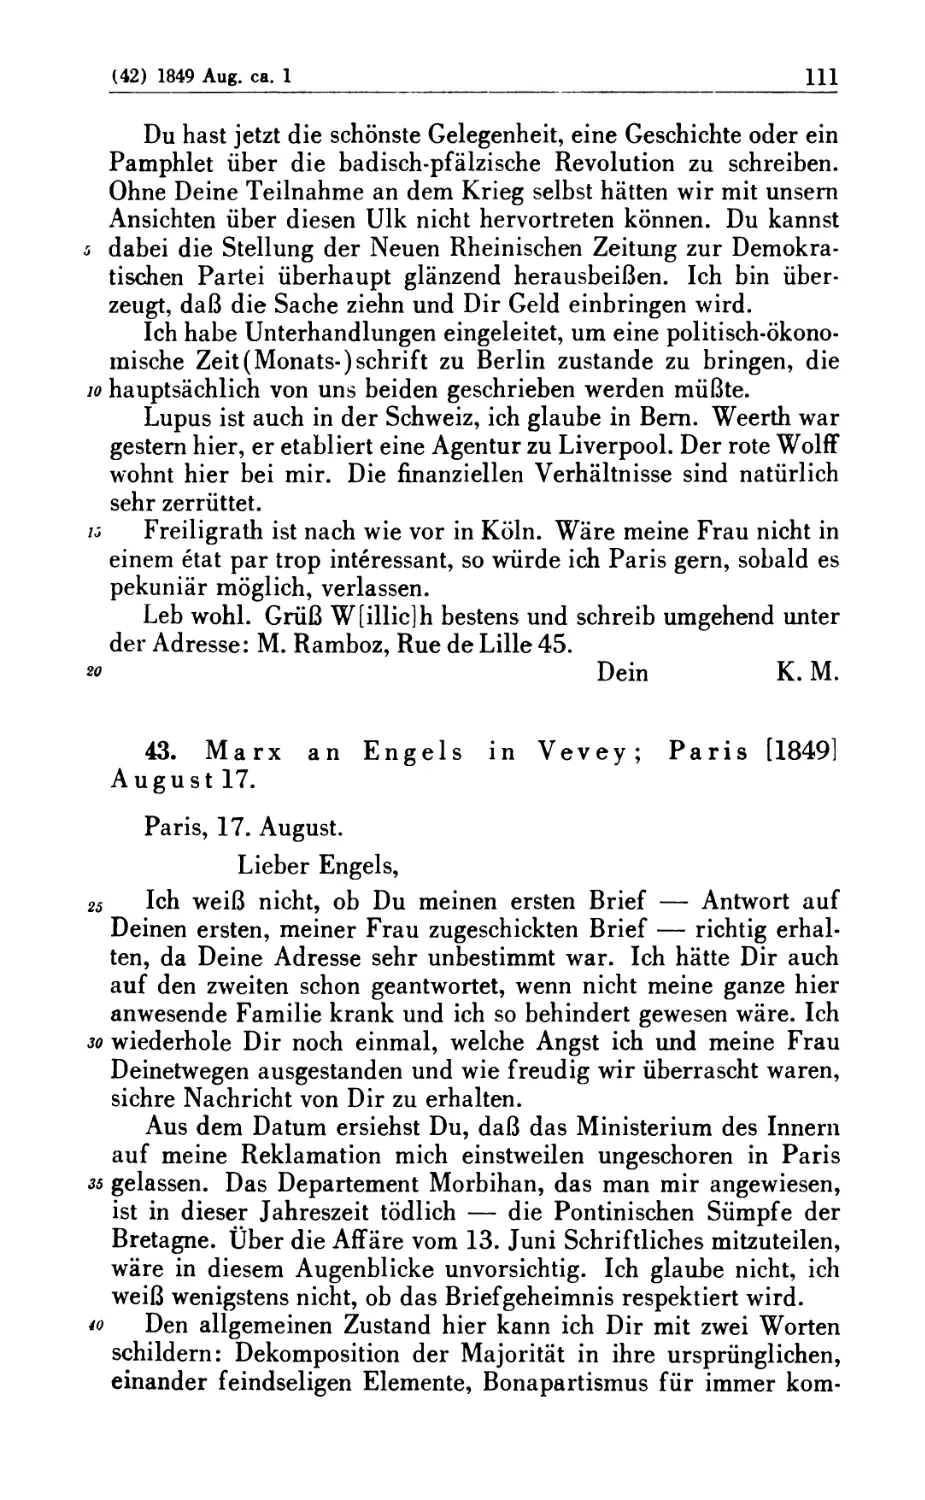 43. Marx an Engels in Vevey; Paris [1849] August 17